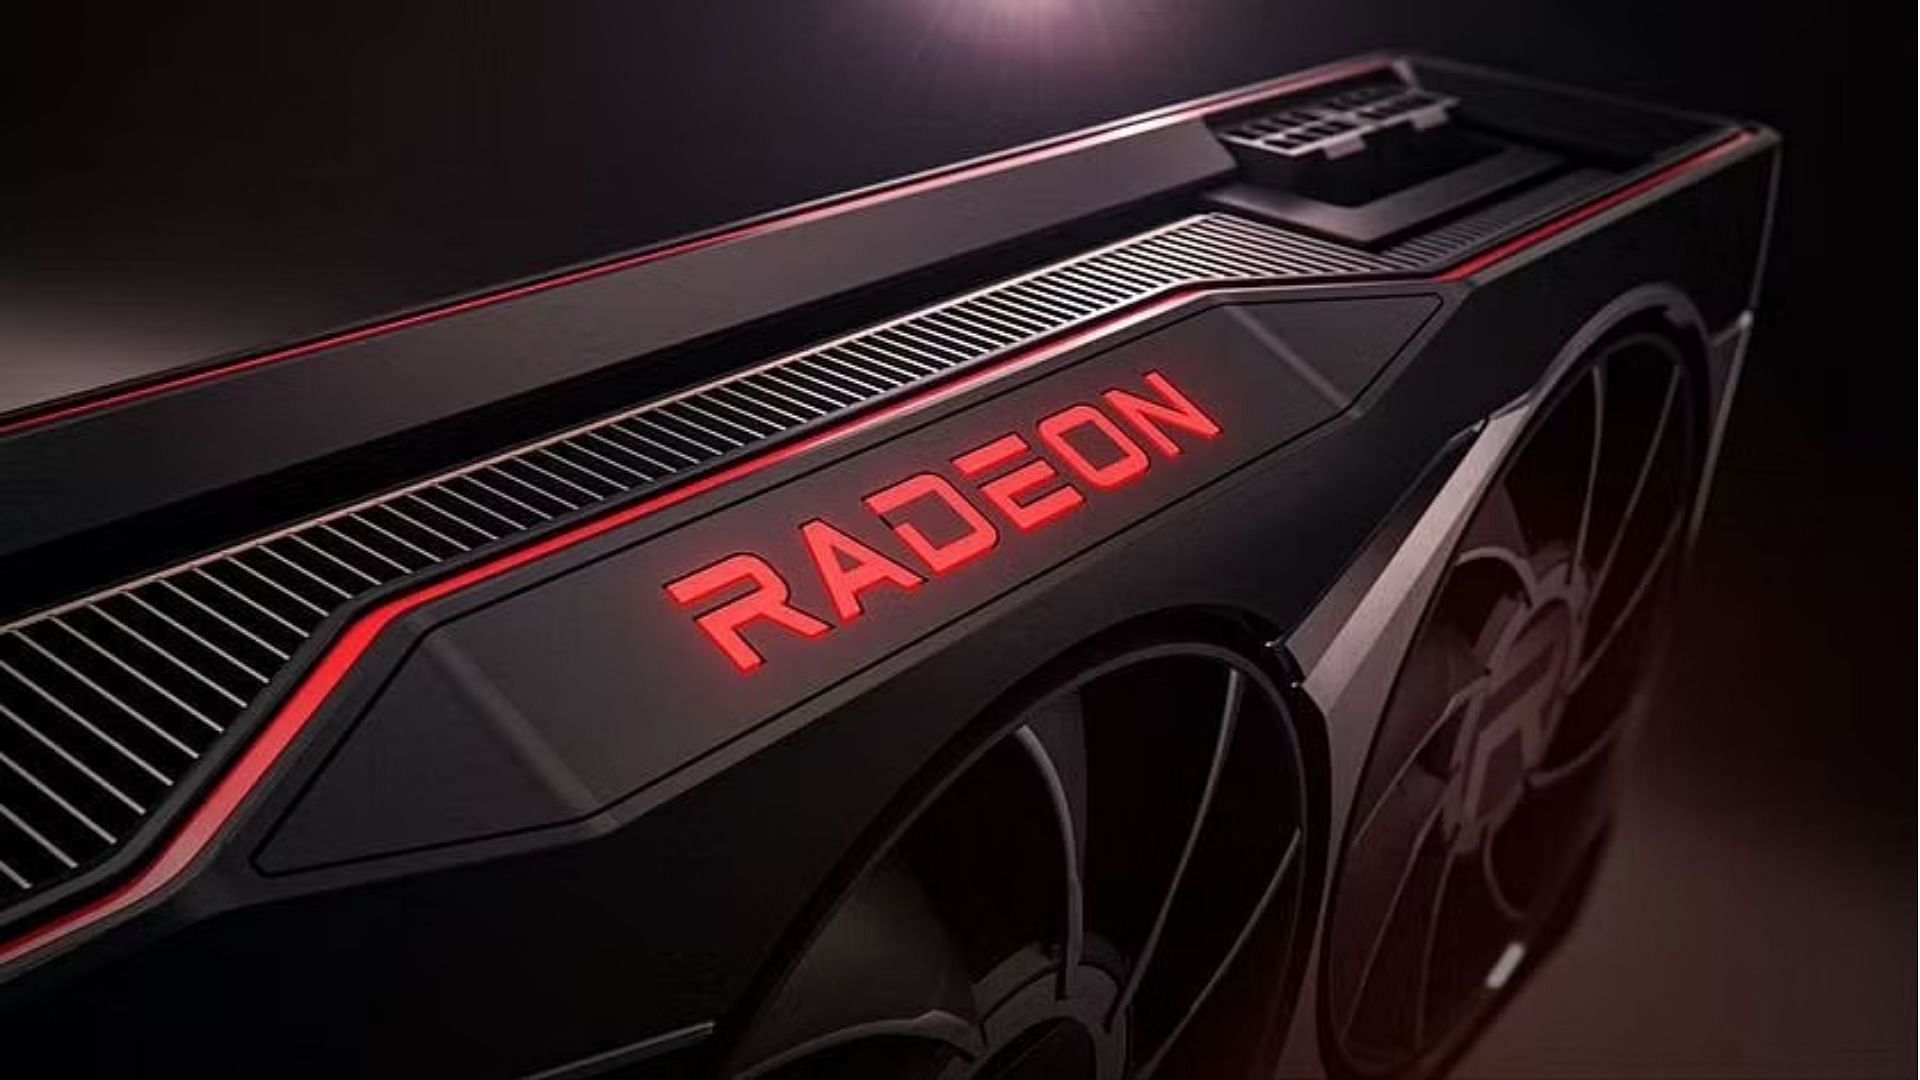 The AMD Radeon logo (Image via AMD)